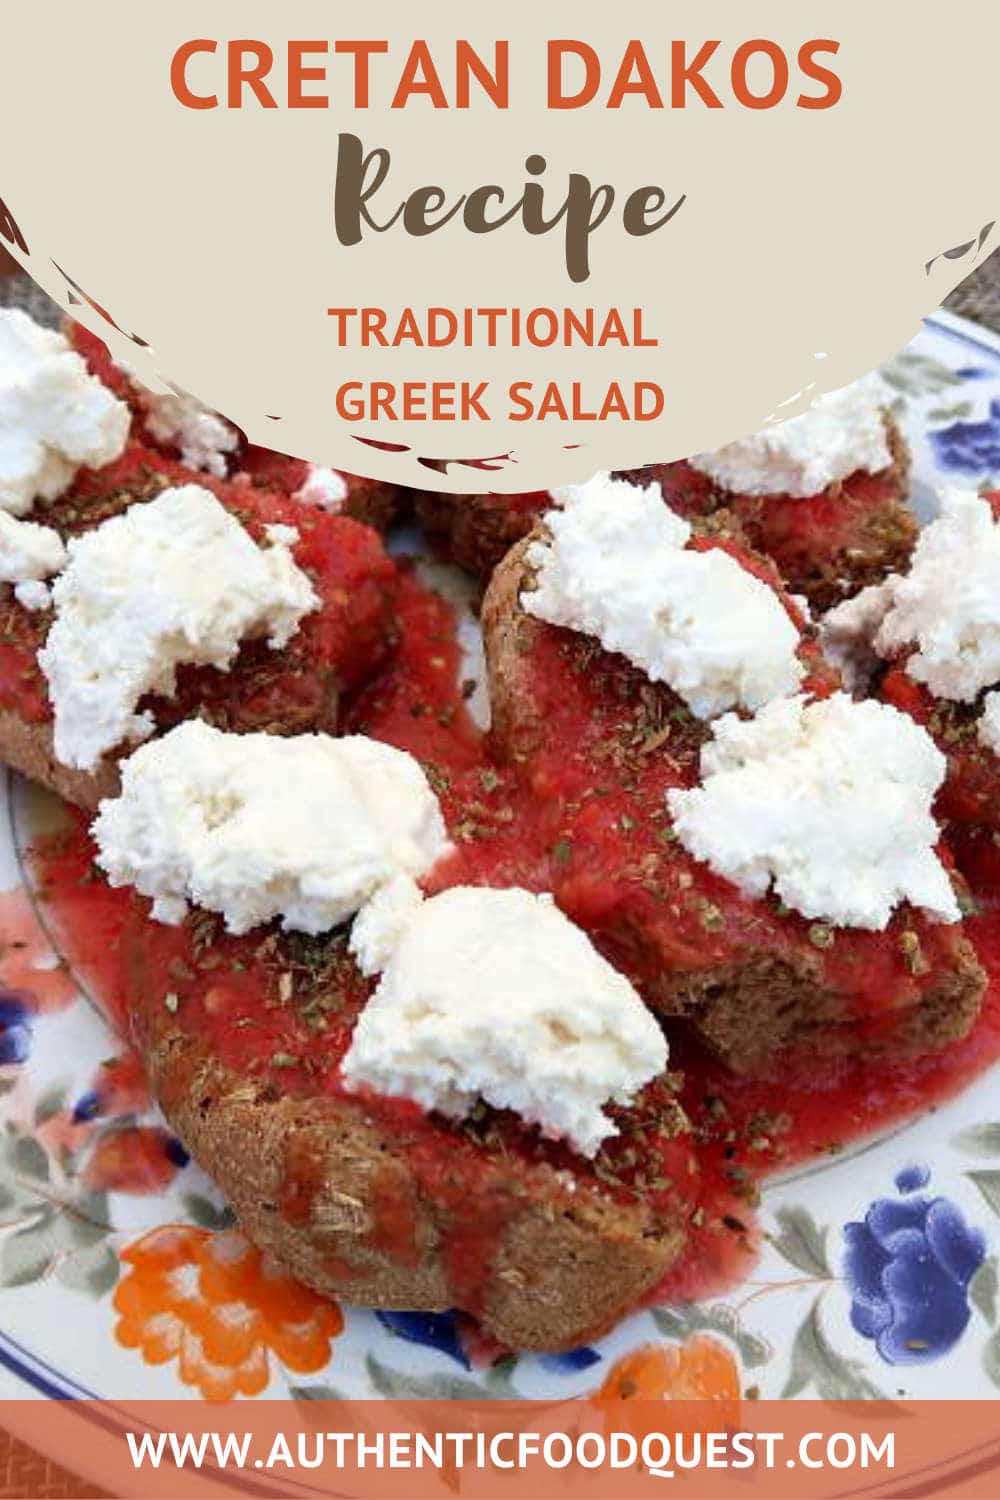 Cretan Dakos Recipe: The Best Authentic Cretan Salad You Want To Make